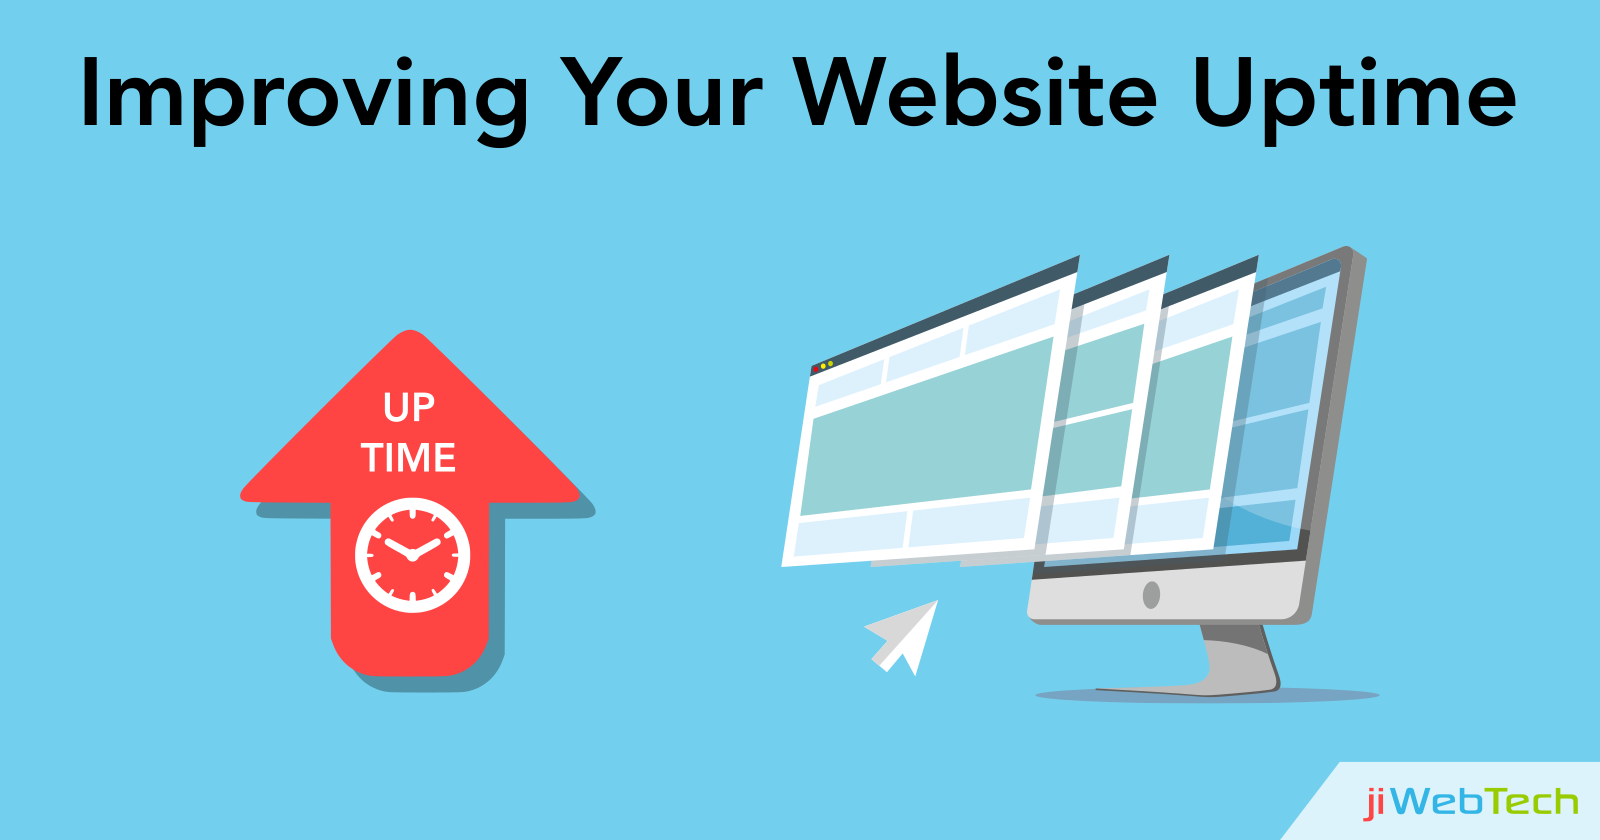 Best Practices For Improving Website Uptime